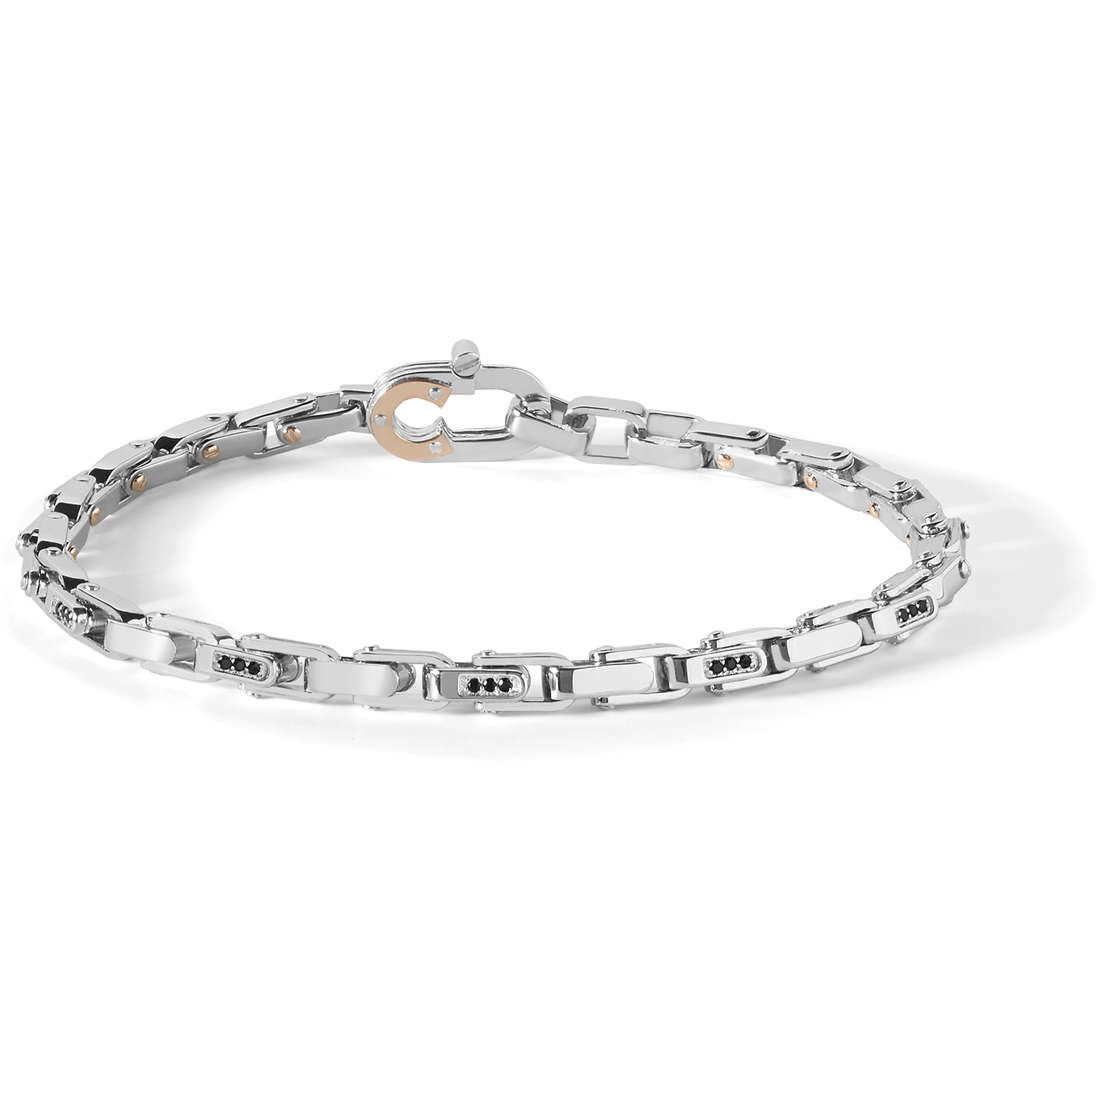 UBR 759 Reverse Jewelry Men’s Bracelet